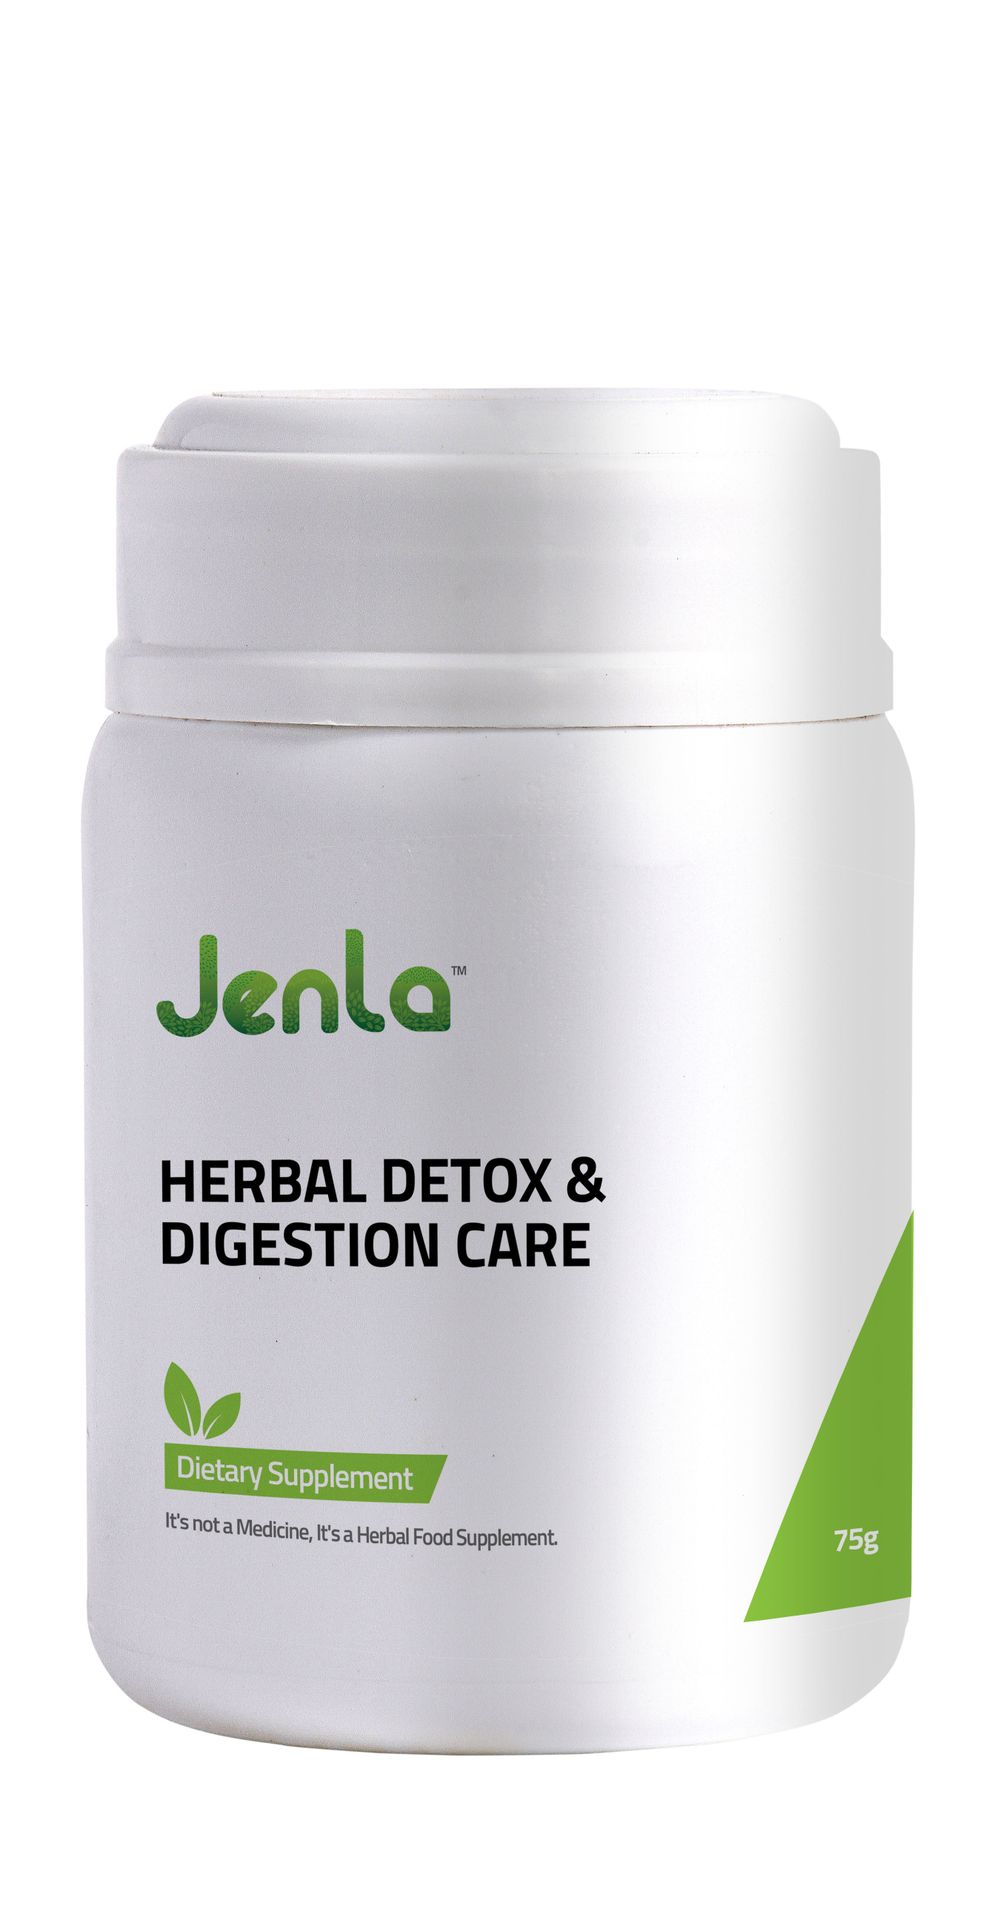 Jenla Herbal Detox & Digestion Care - hfnl!fe